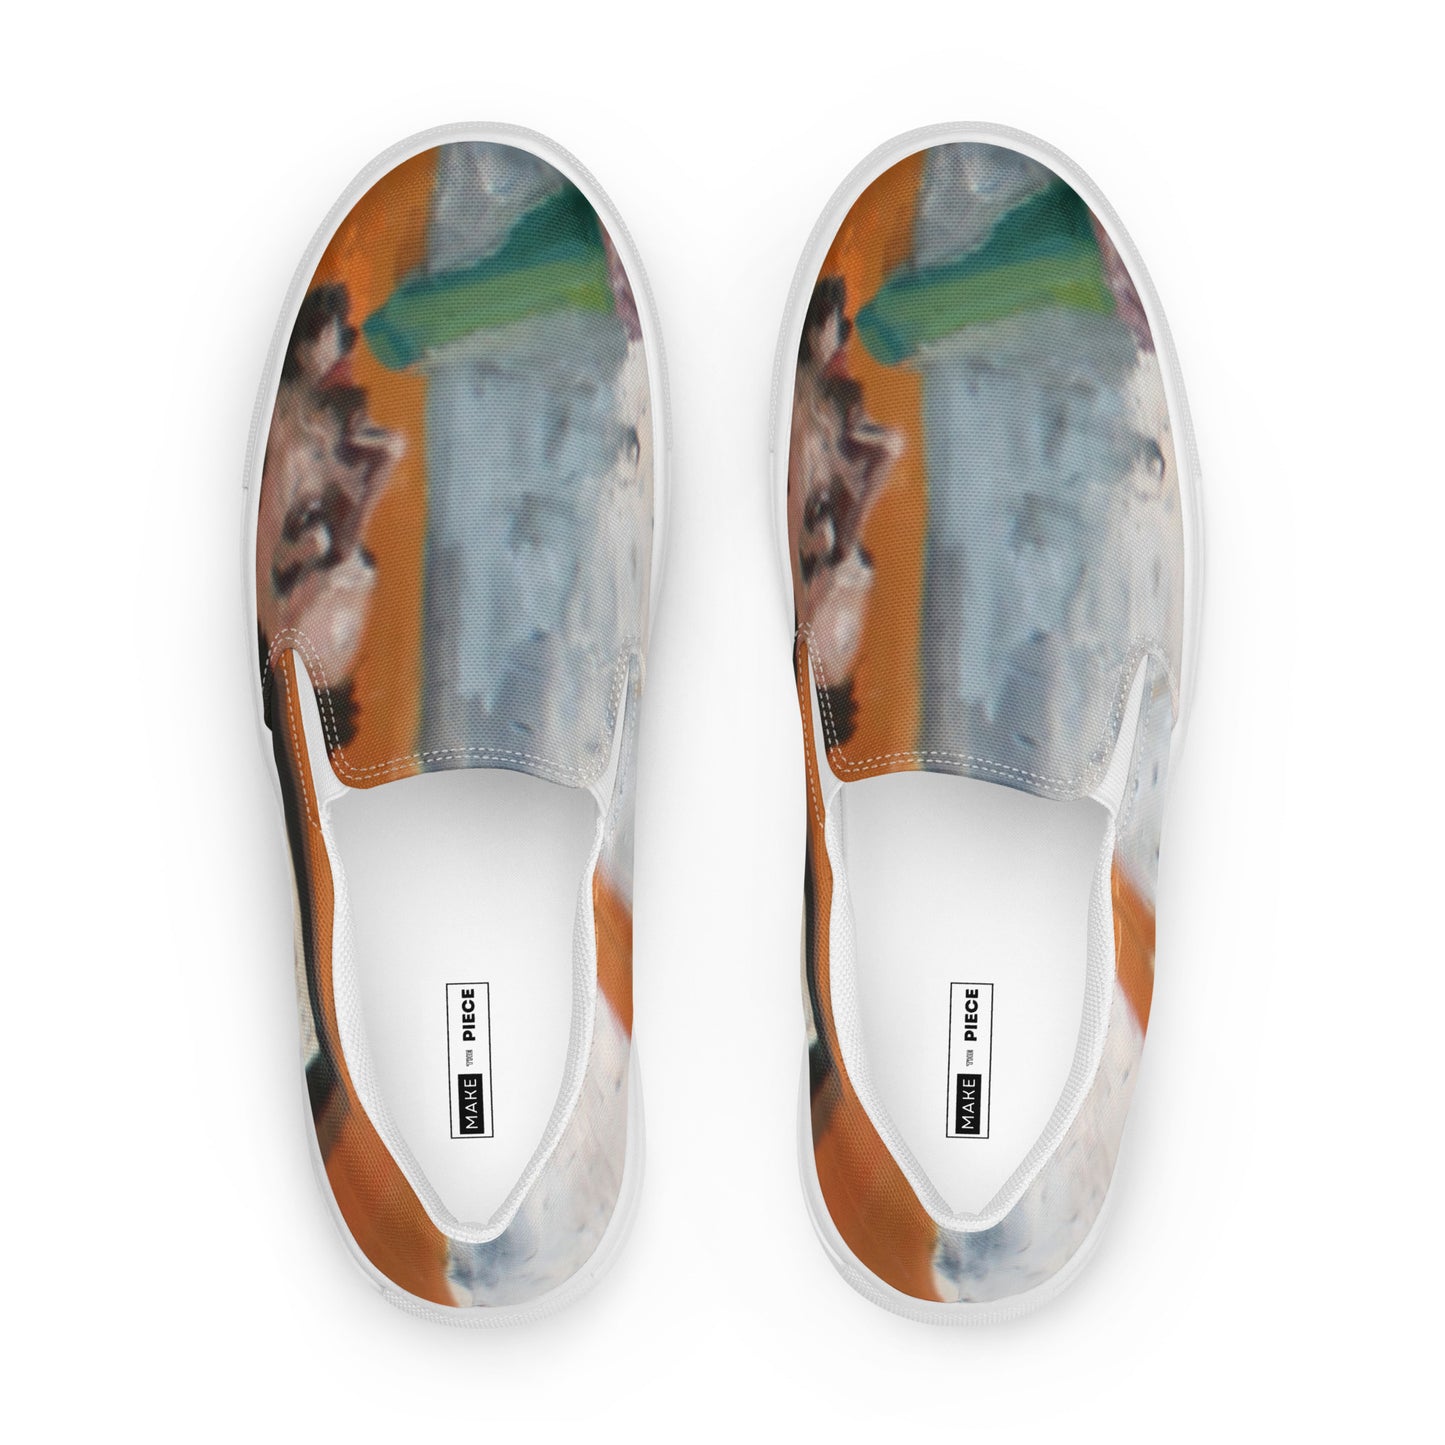 The Couple - Men’s slip-on canvas shoes